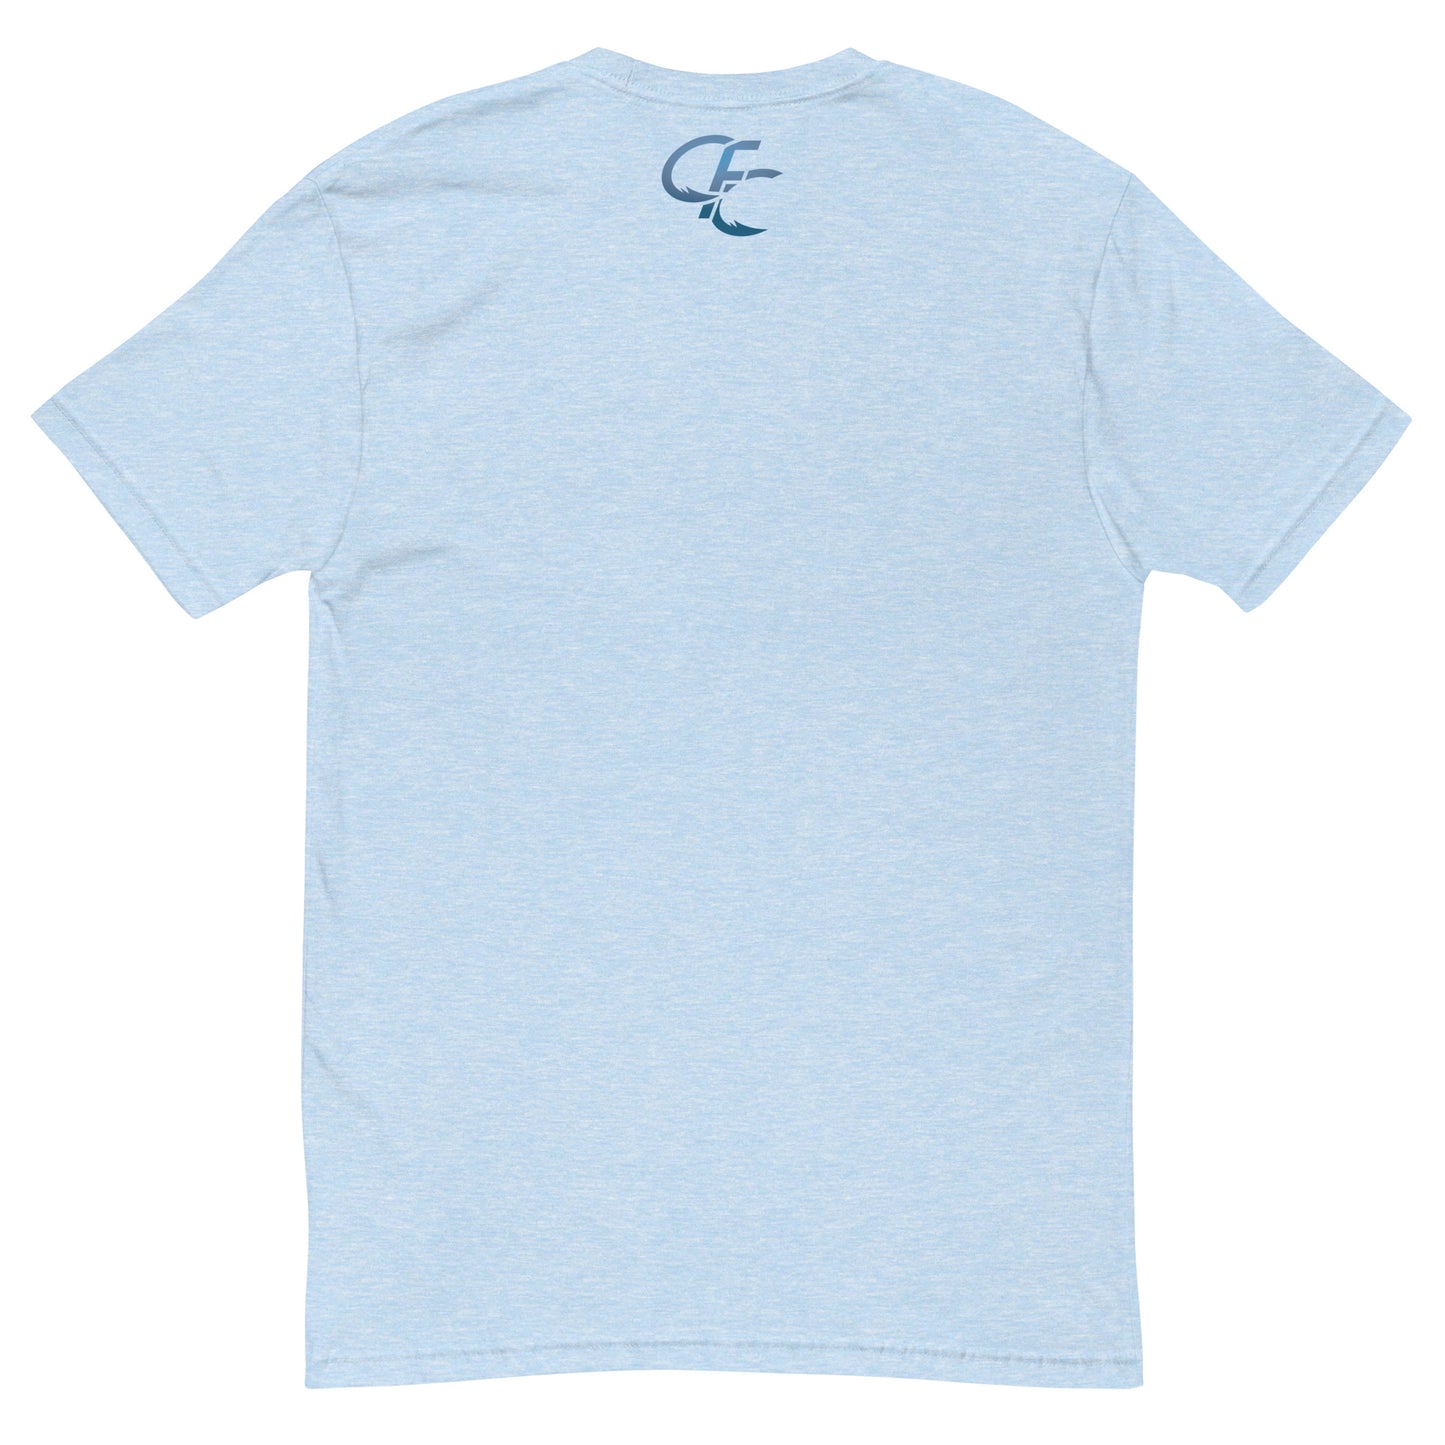 Fishers of Men CFC Short Sleeve T-shirt